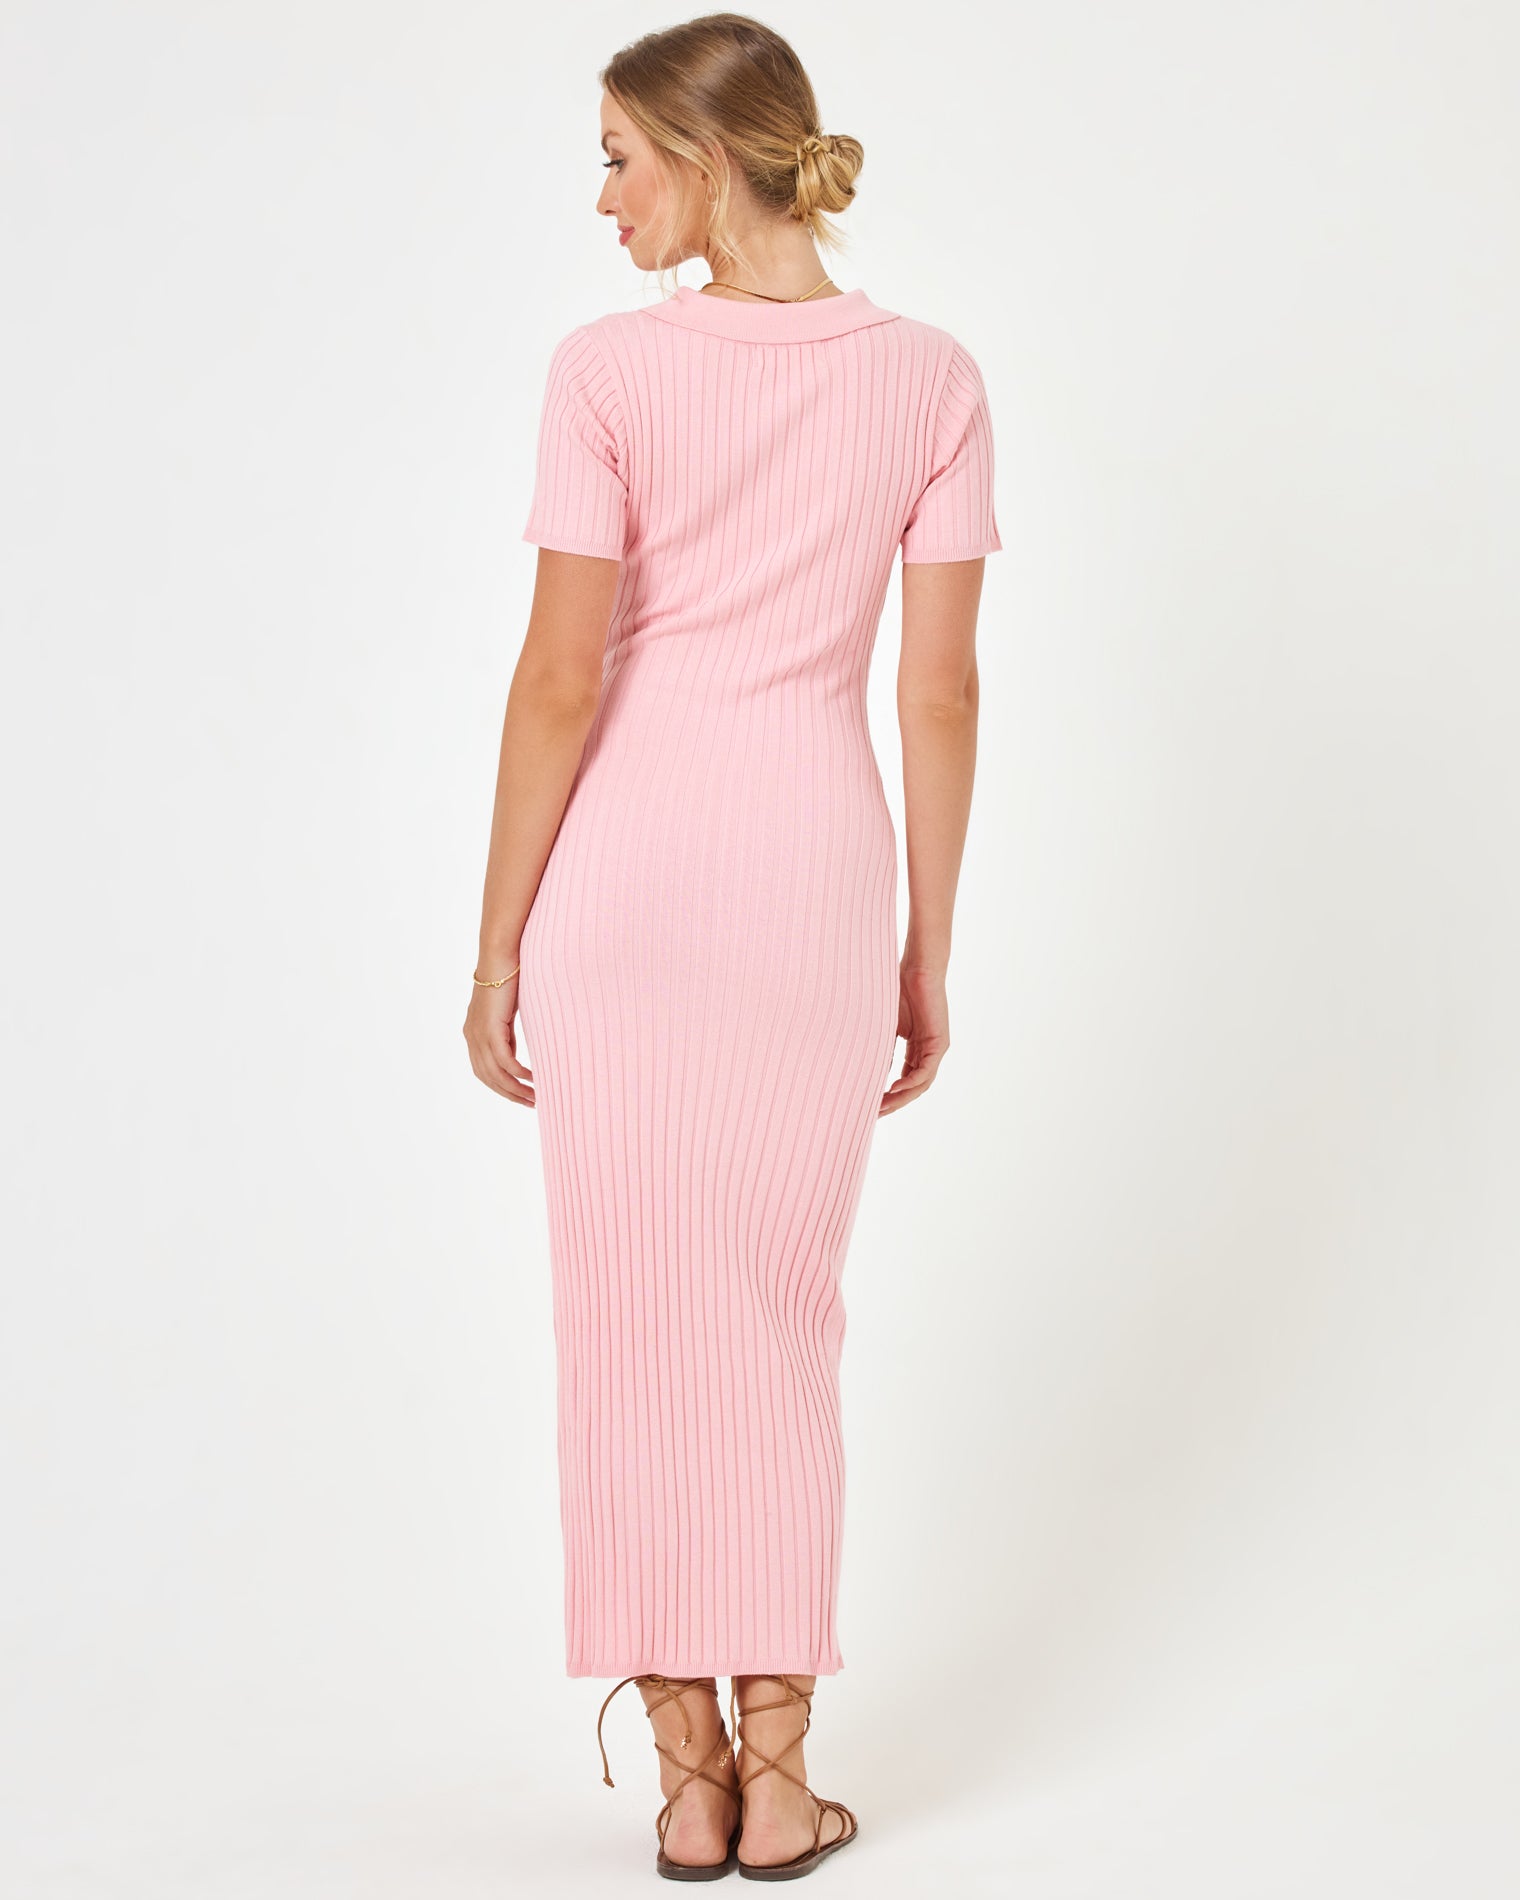 Lena Dress - Macaroon Pink Macaroon Pink | Model: Taylor (size: S)